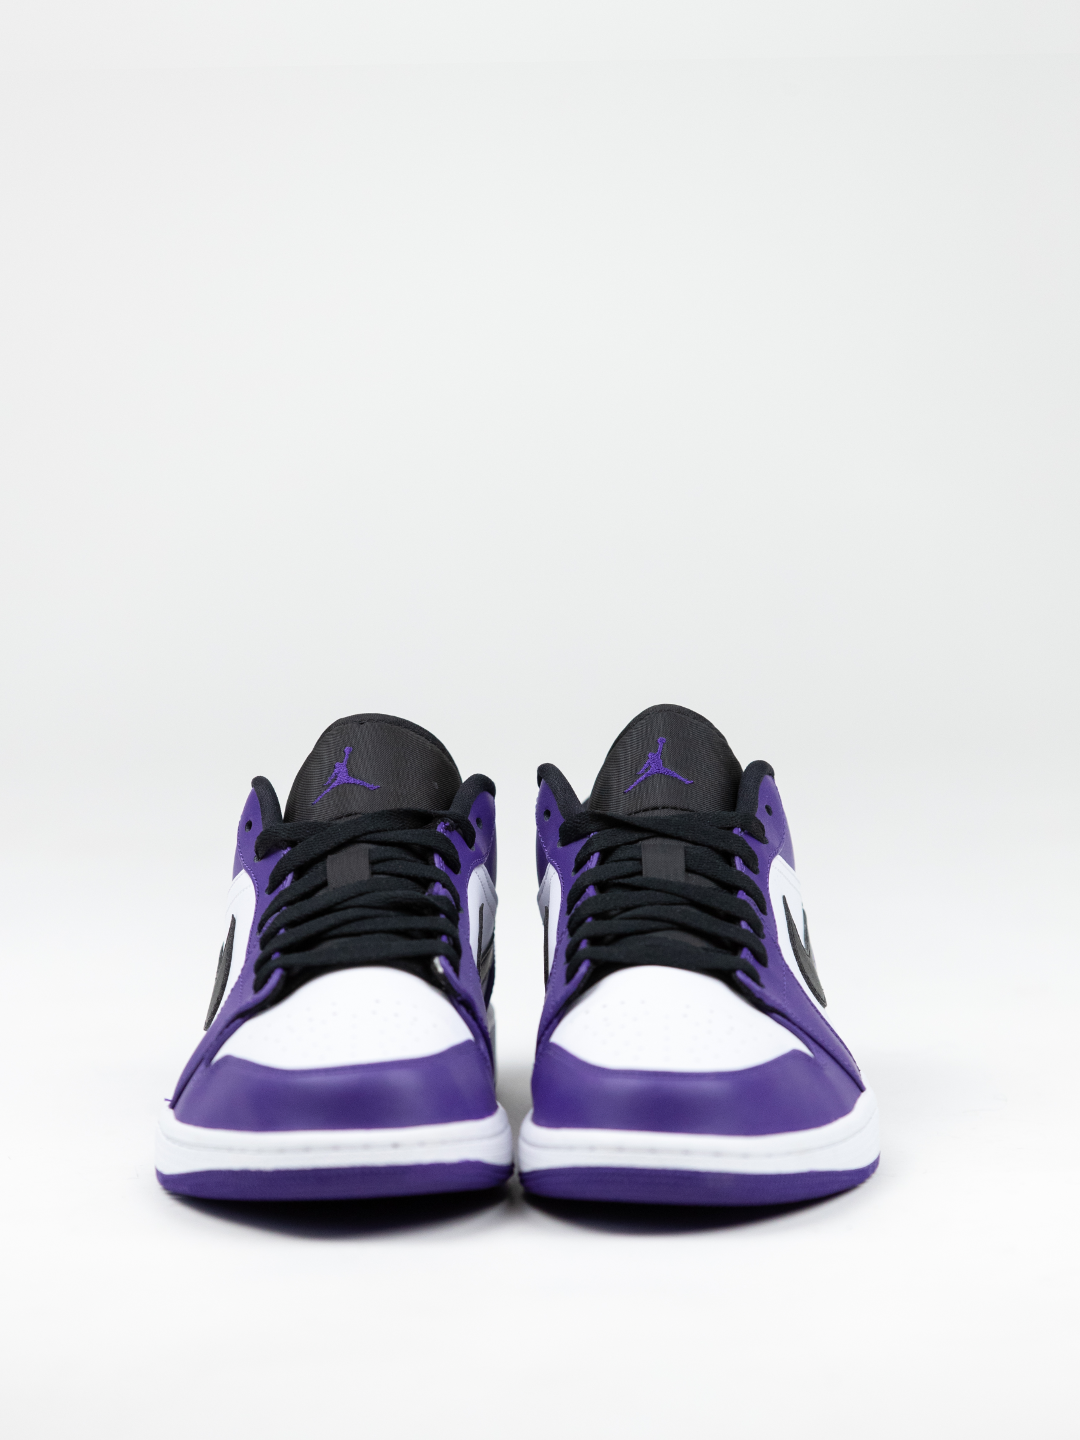 Air Jordan 1 Low 'Court Purple & White-Black'